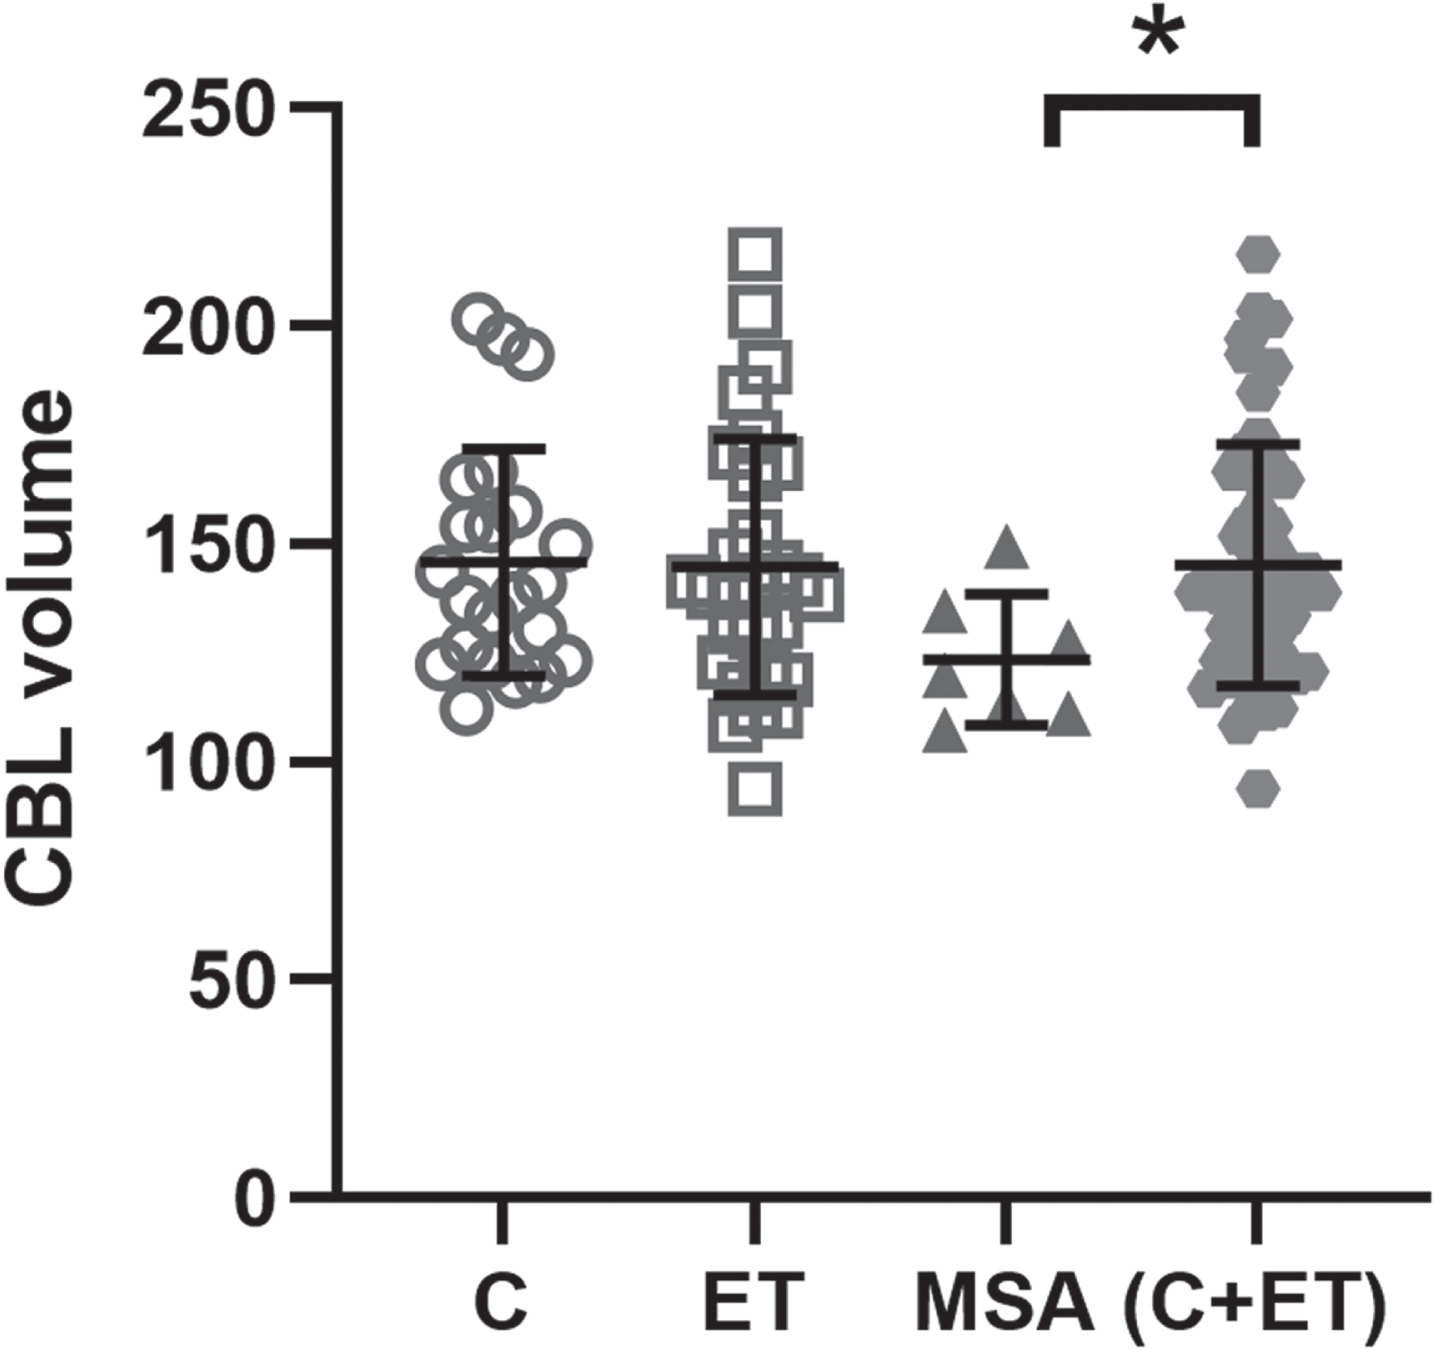 Mean total cerebellar volume in ET when compared to controls and MSA cases.